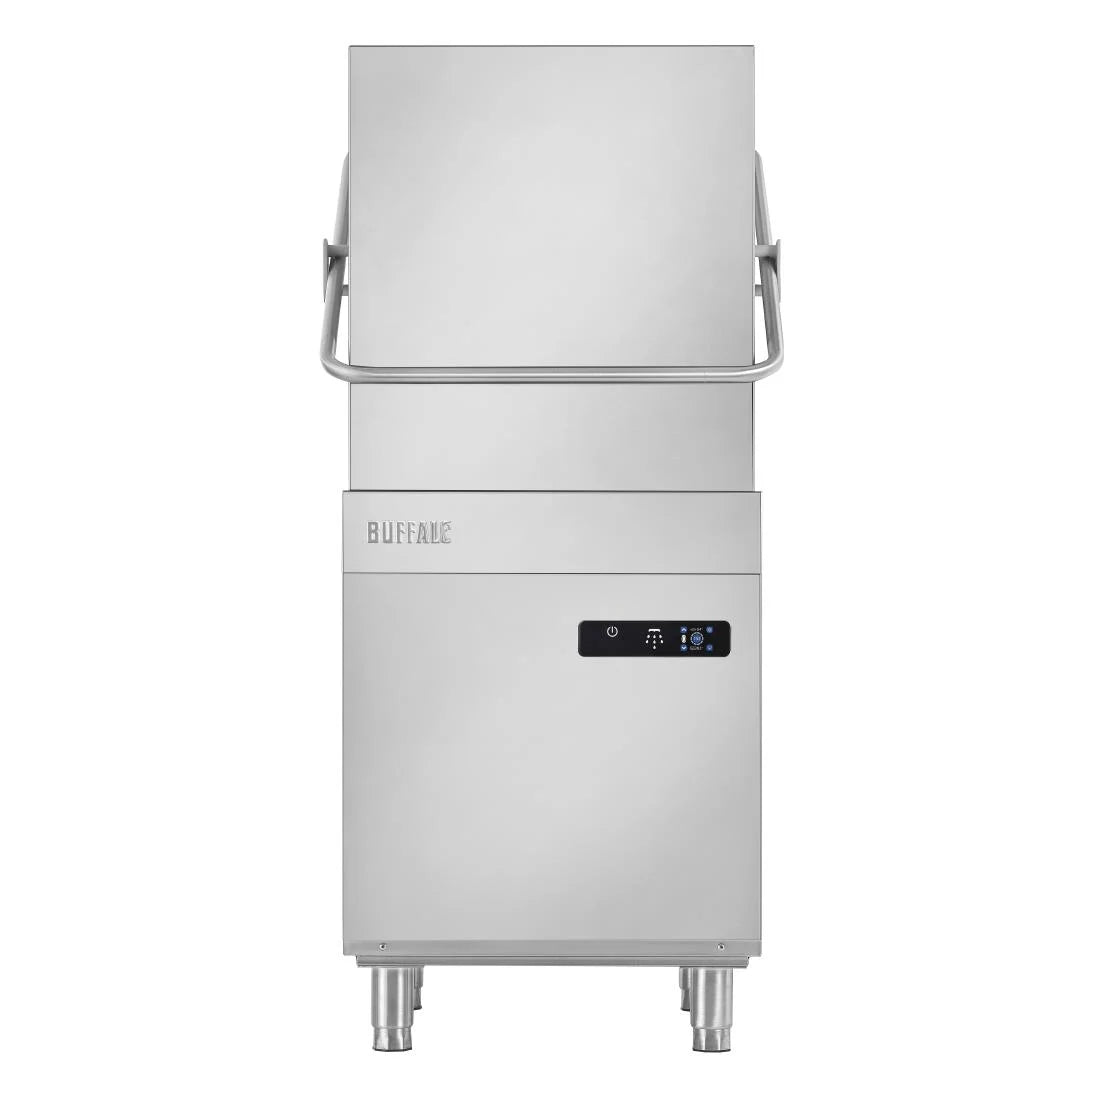 DN975 Buffalo Digital Pass Through Dishwasher 7kW Three Phase JD Catering Equipment Solutions Ltd